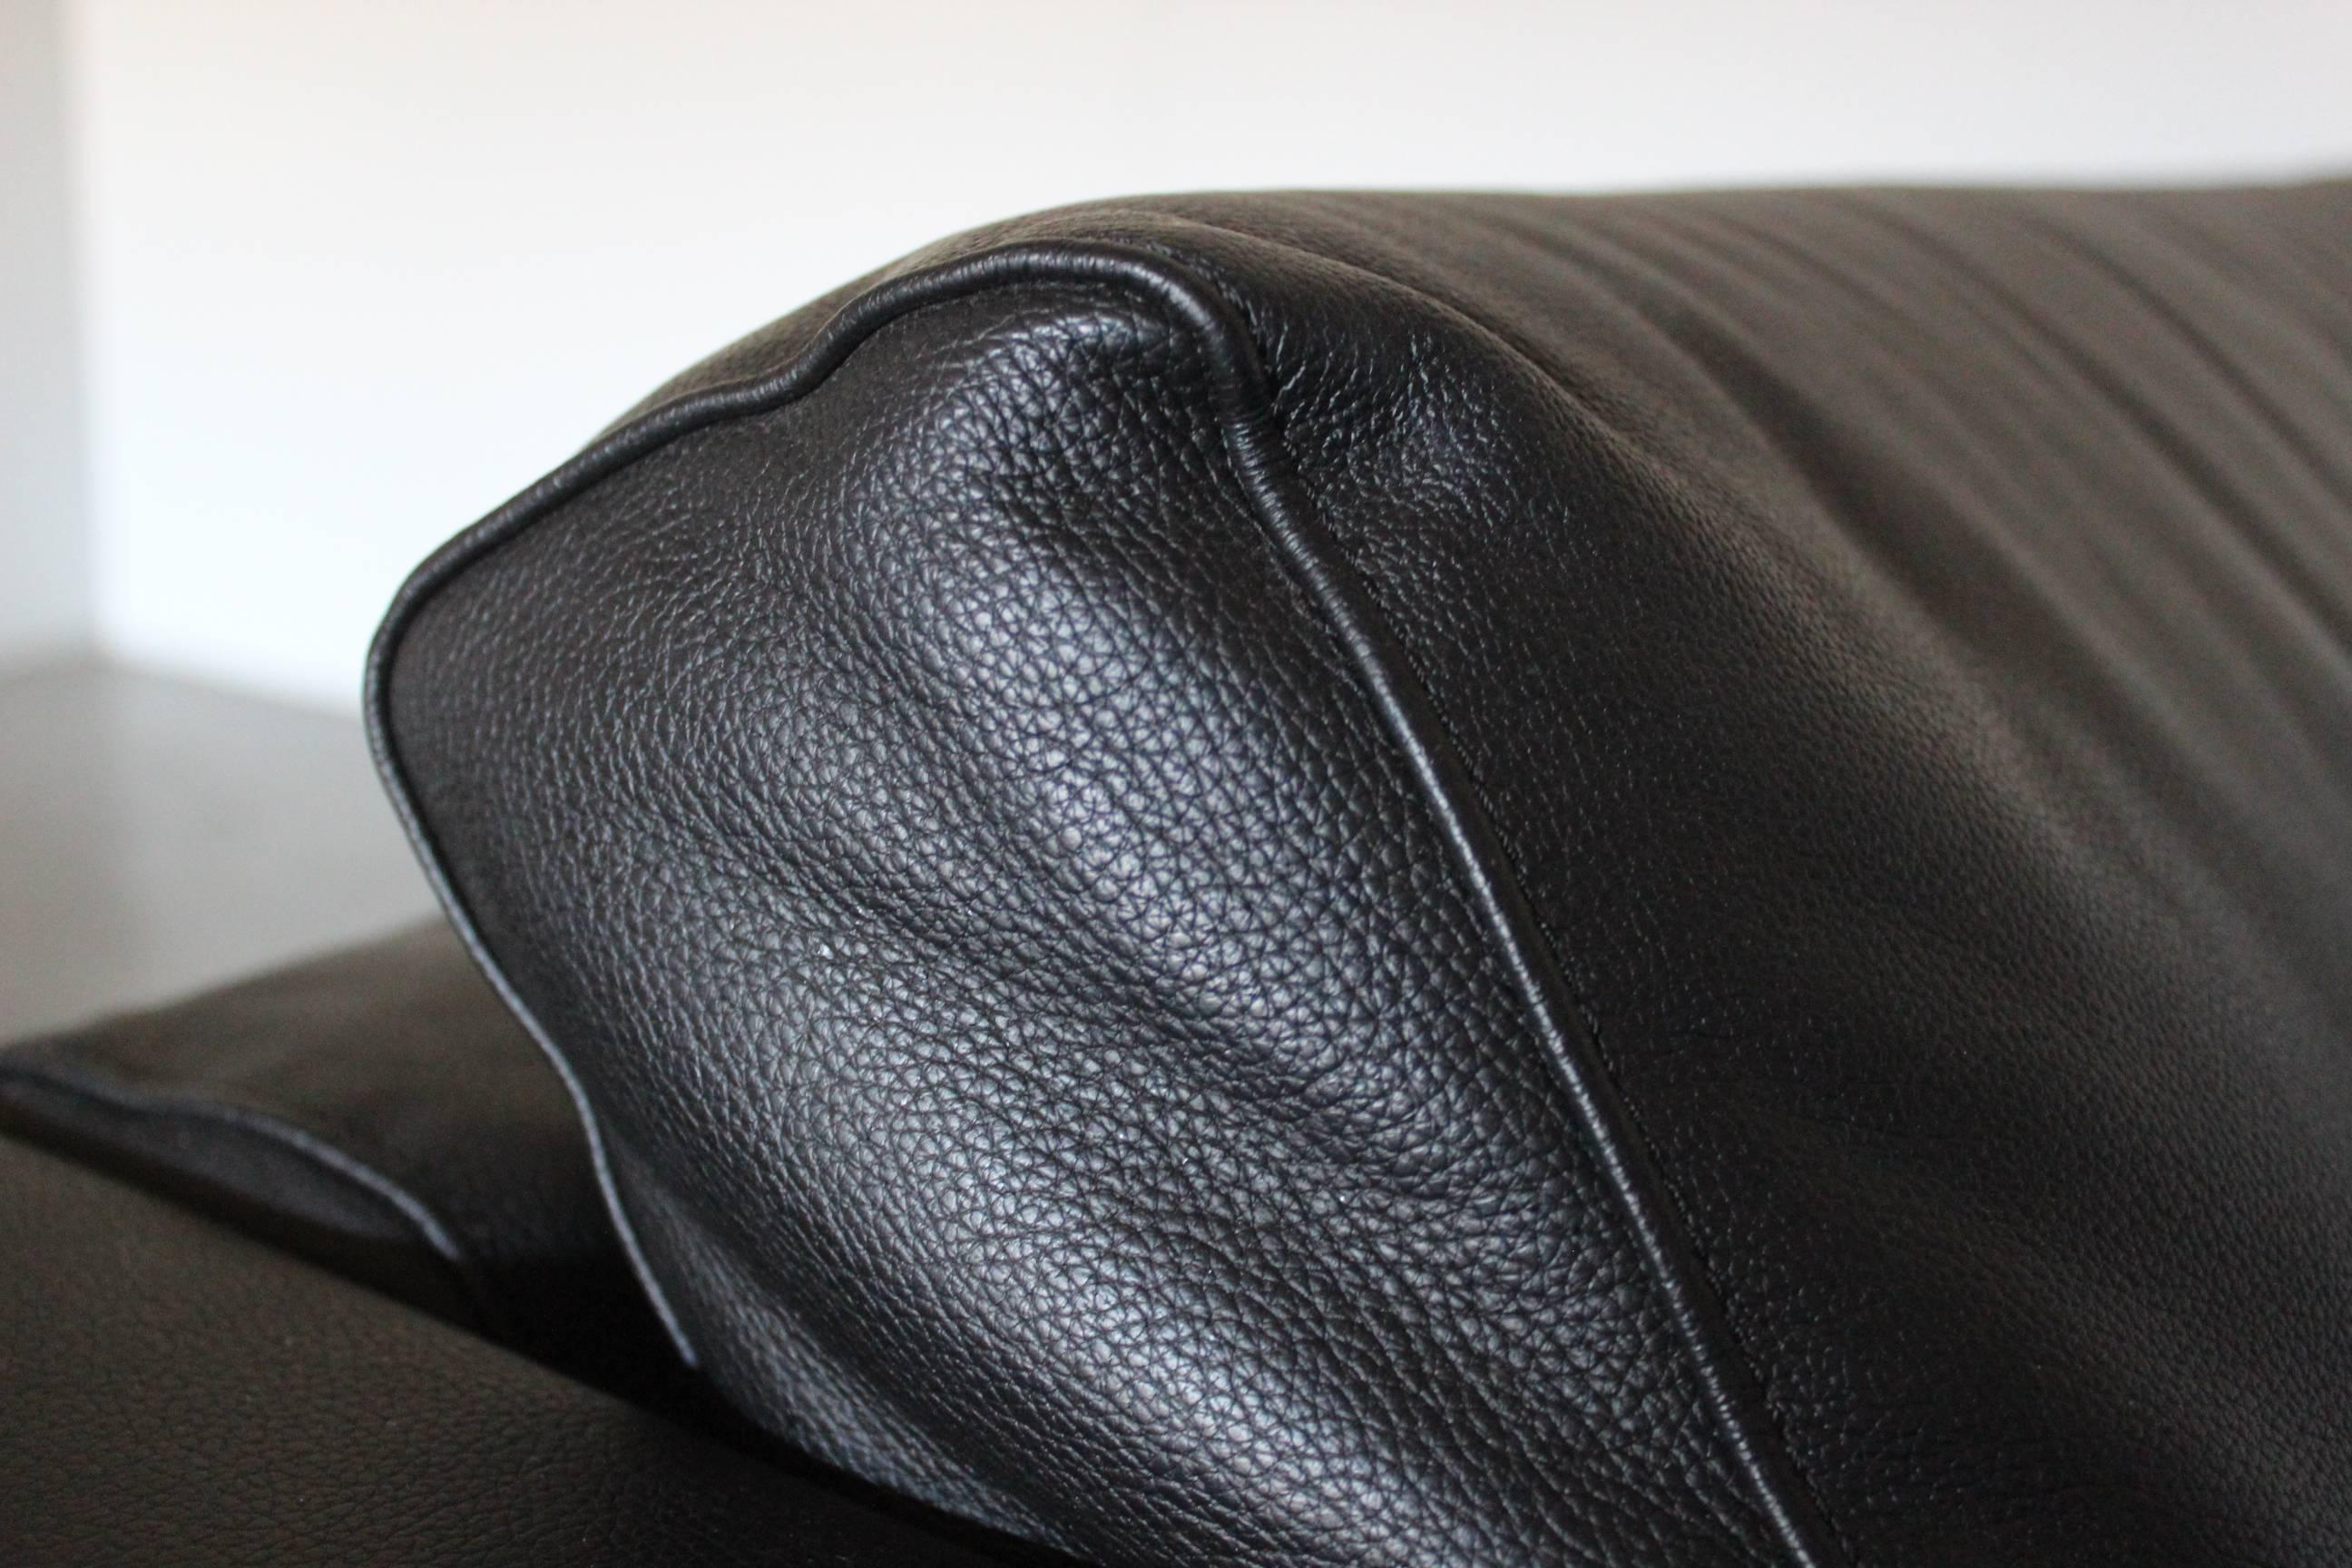 Vitra “Park” Three-Seat Sofa in Jet Black Leather by Jasper Morrison 1